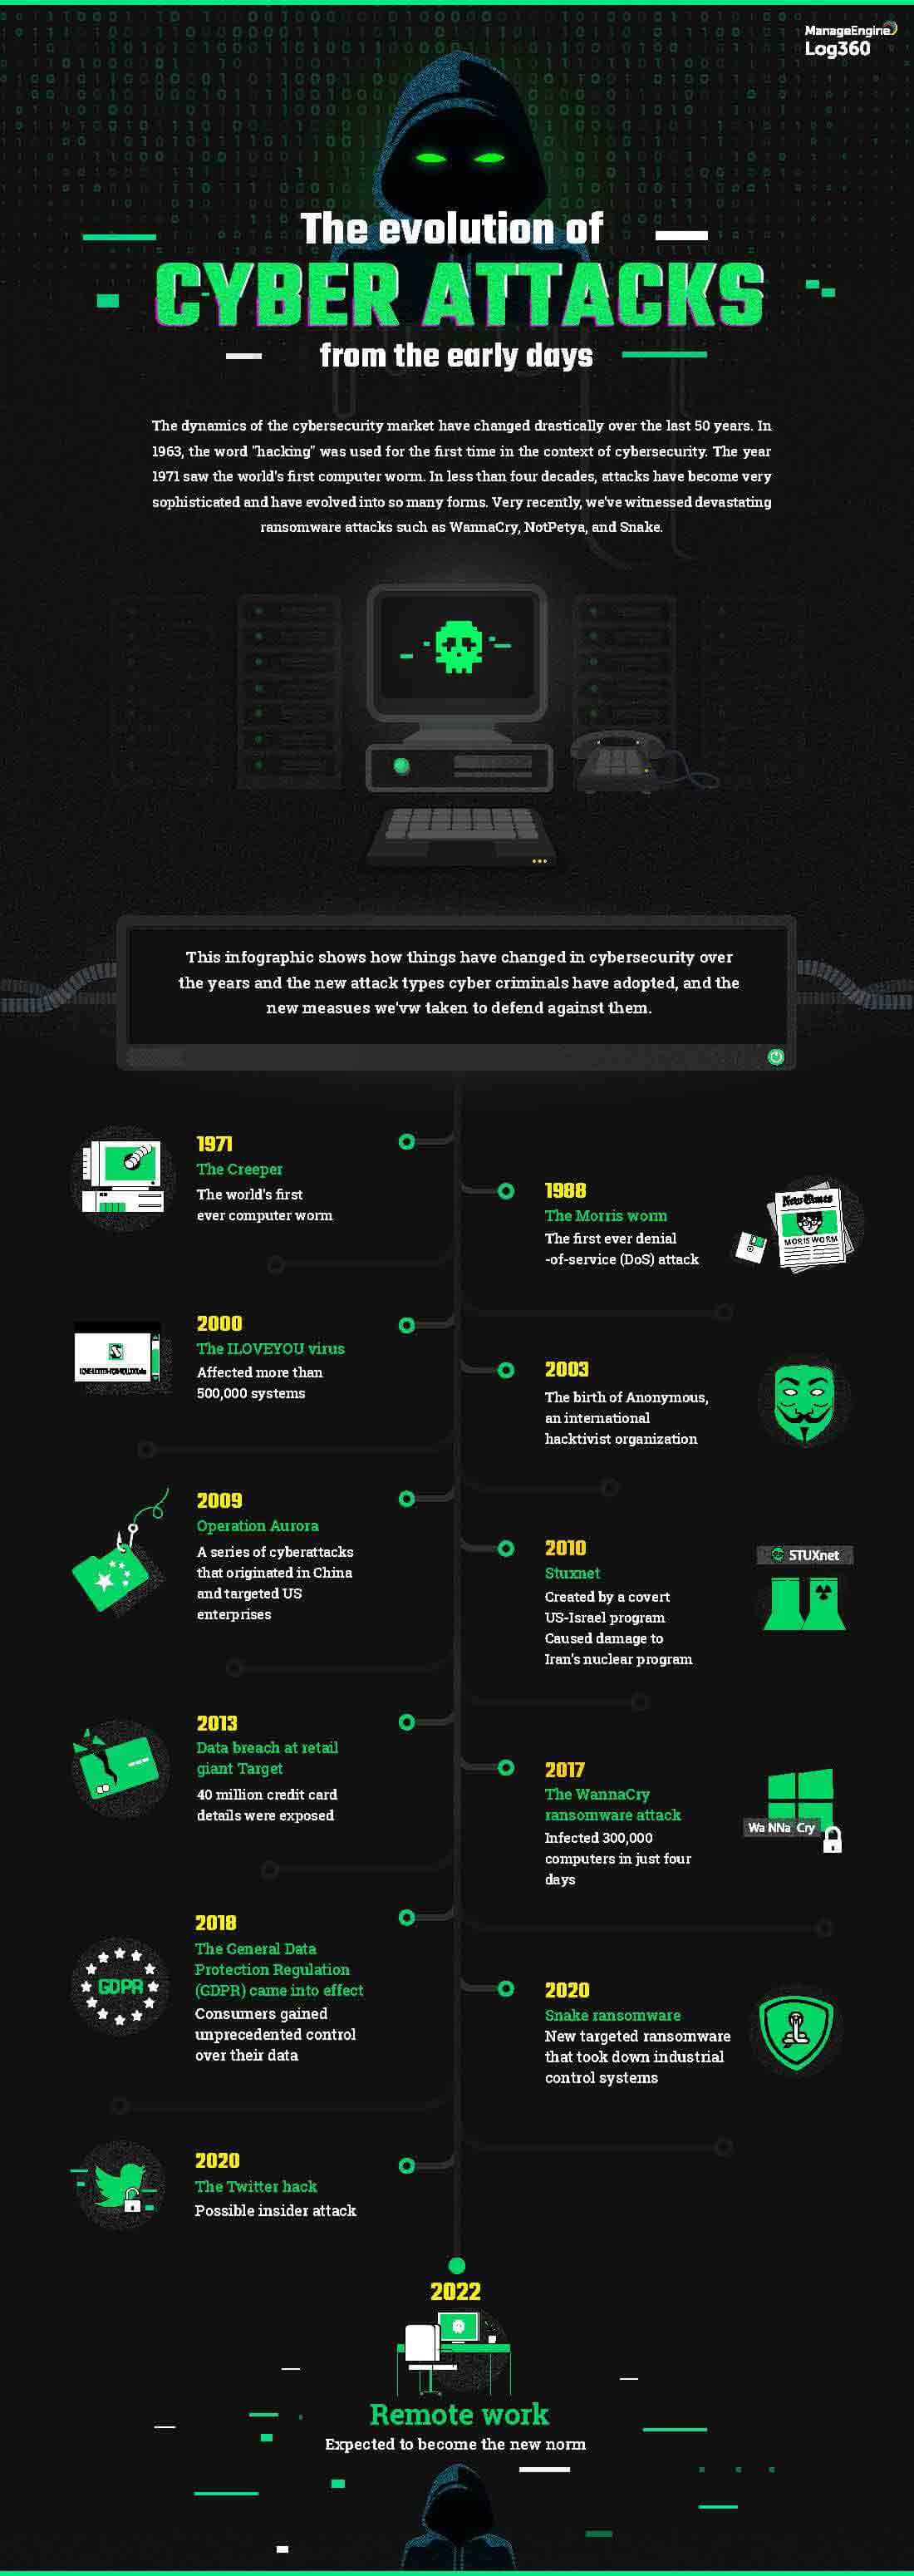 The evolution of cyberattacks